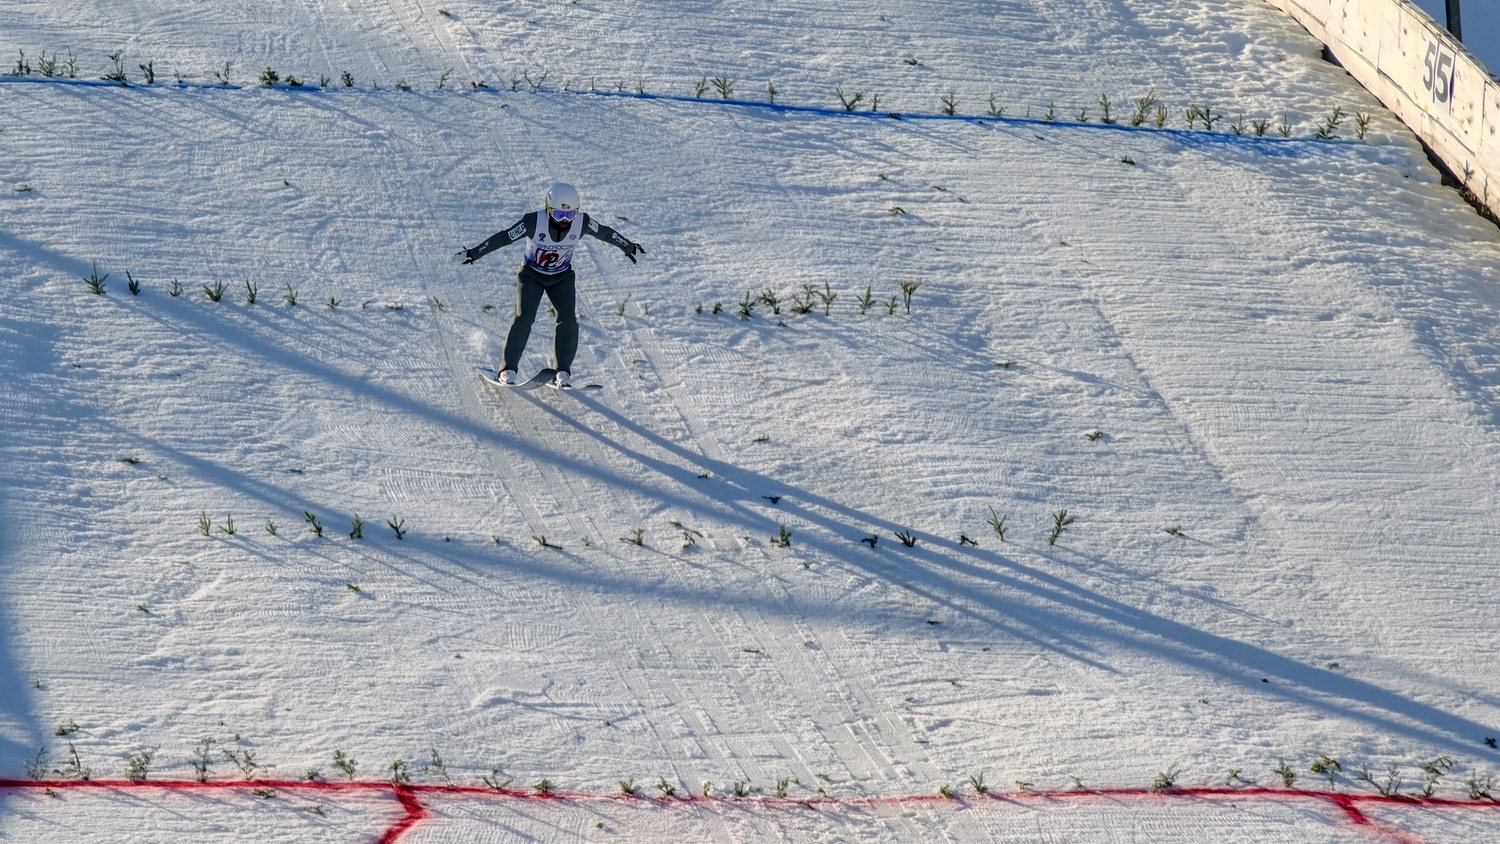 David Edlund from St. Paul Ski Club at the 118th Annual Norge Ski Club Winter Tournament.